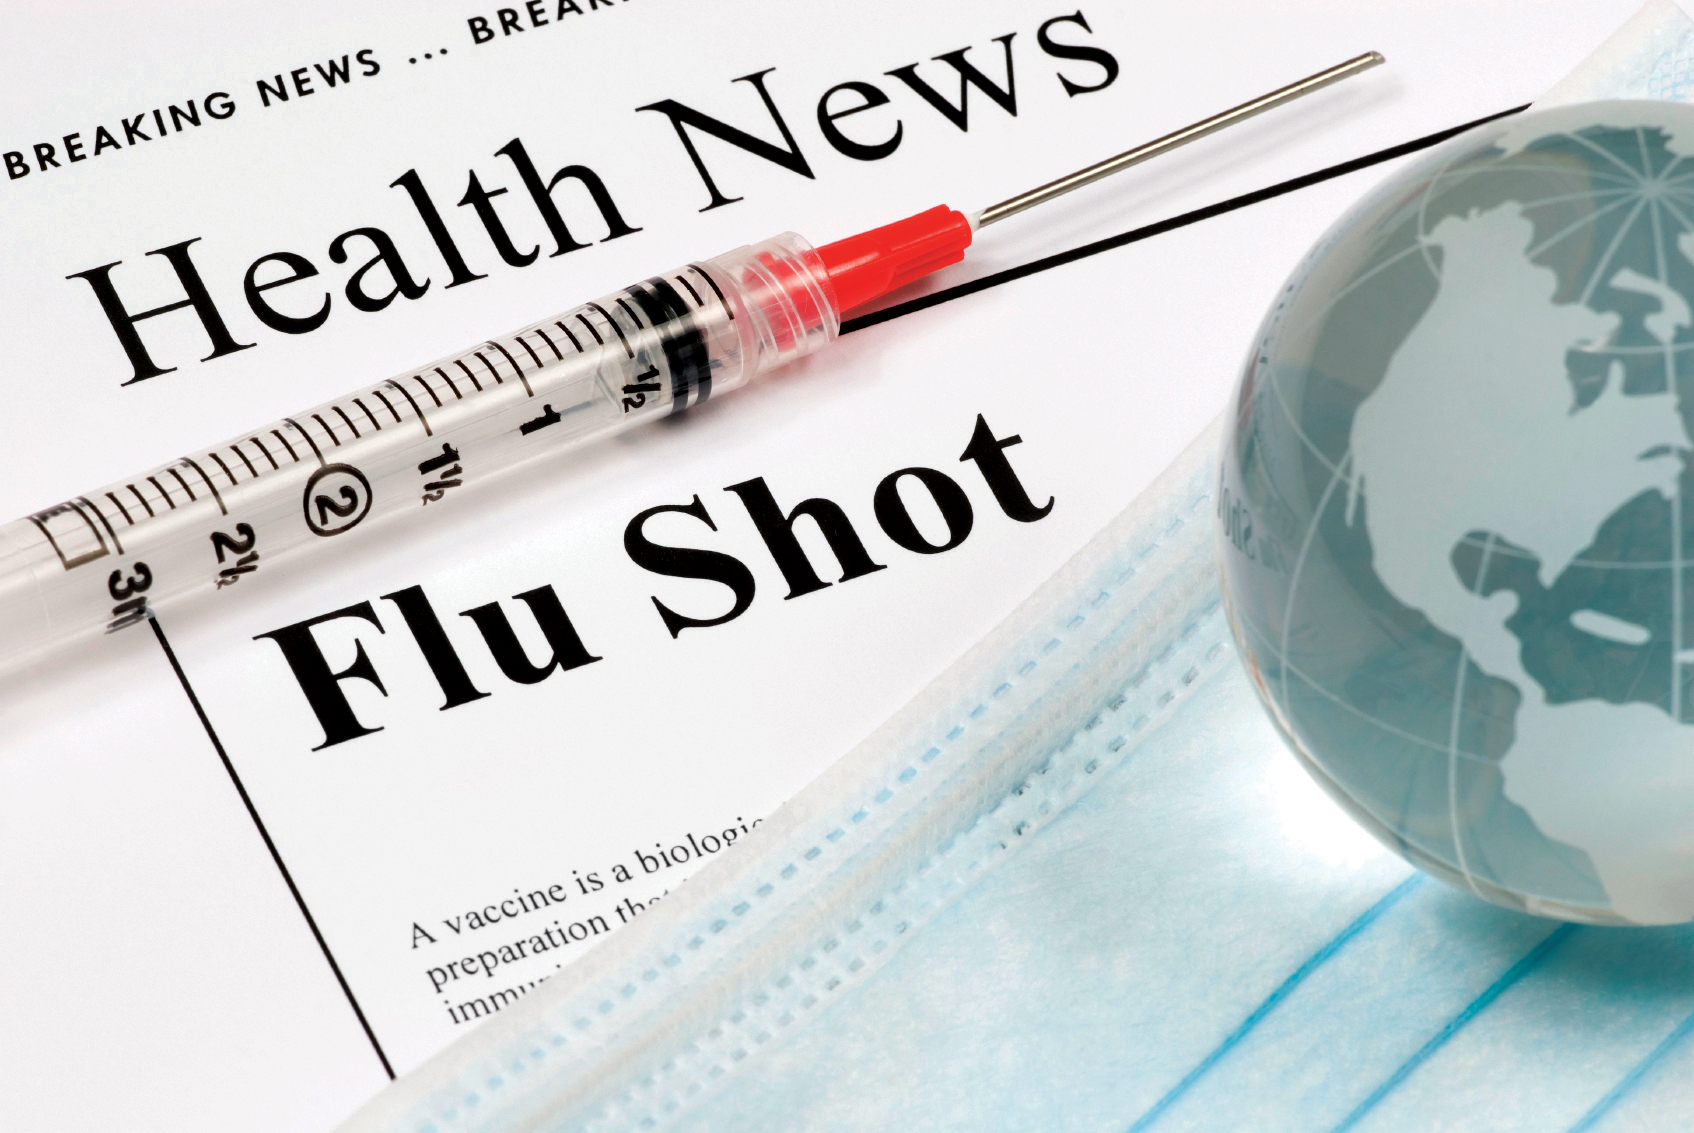 SRPMIC Flu Shot Campaign to Begin in October